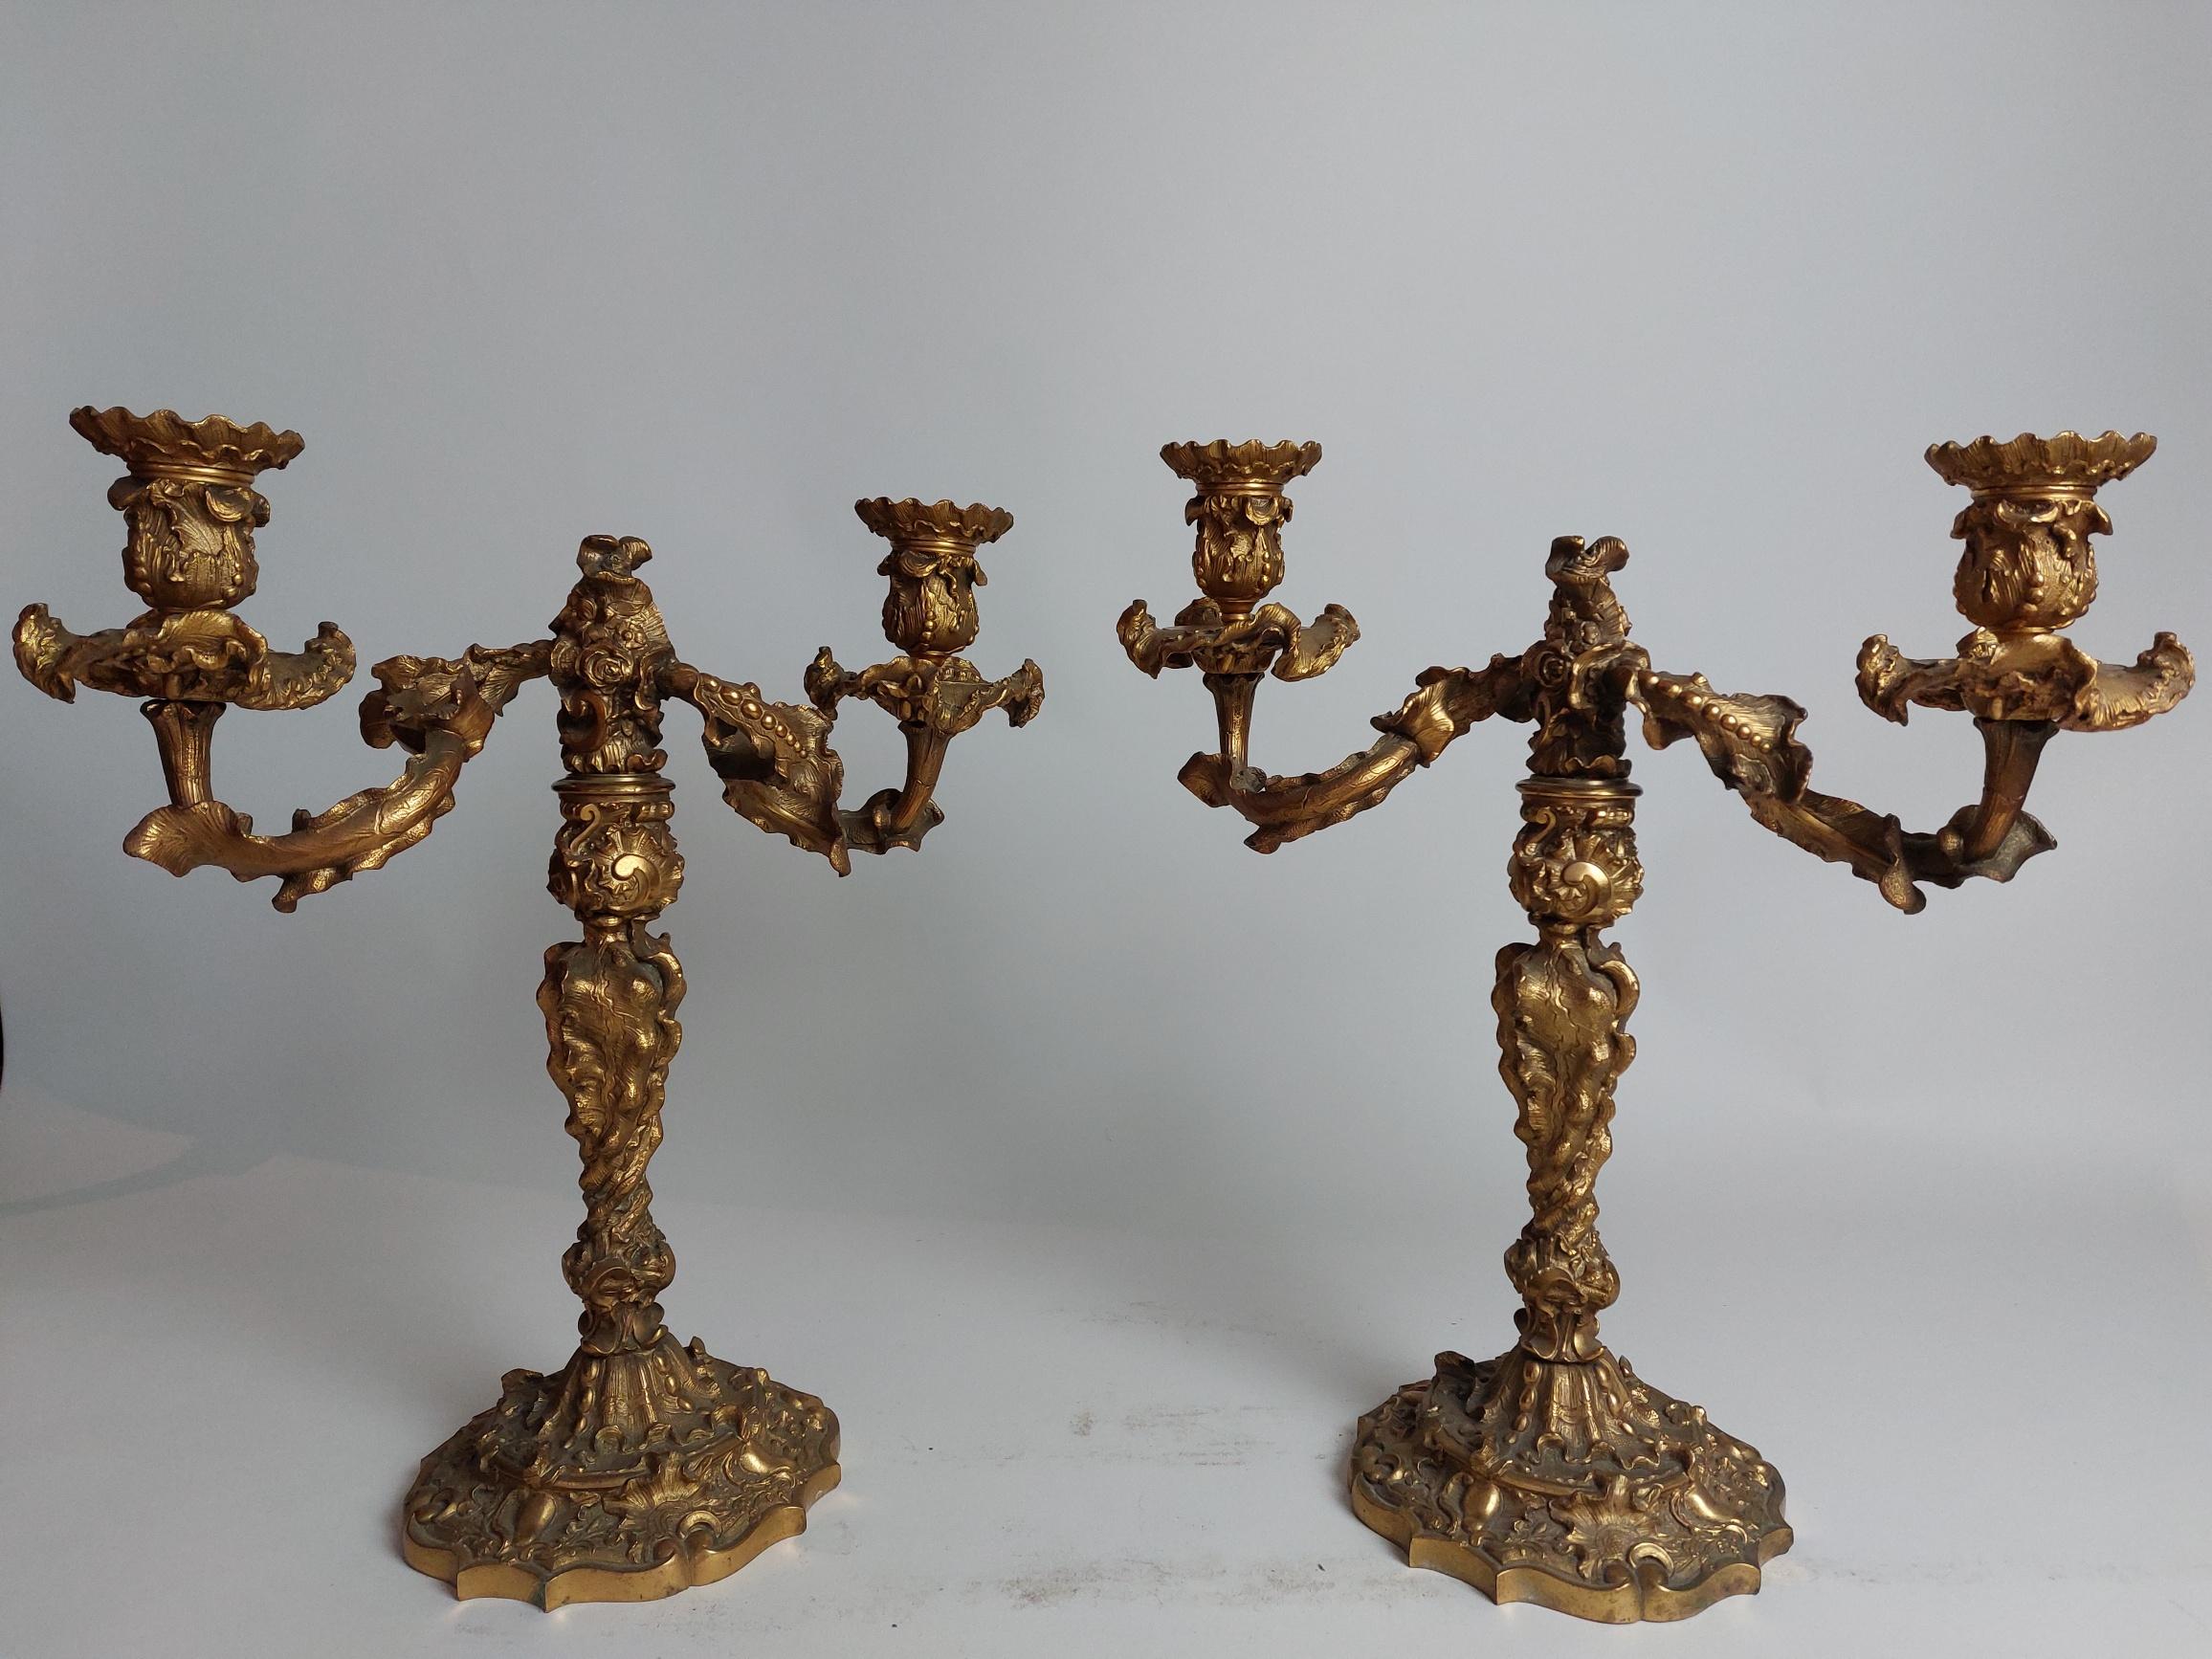 A pair of opulent Regency (1811-1820) ormolu candlestick holders.